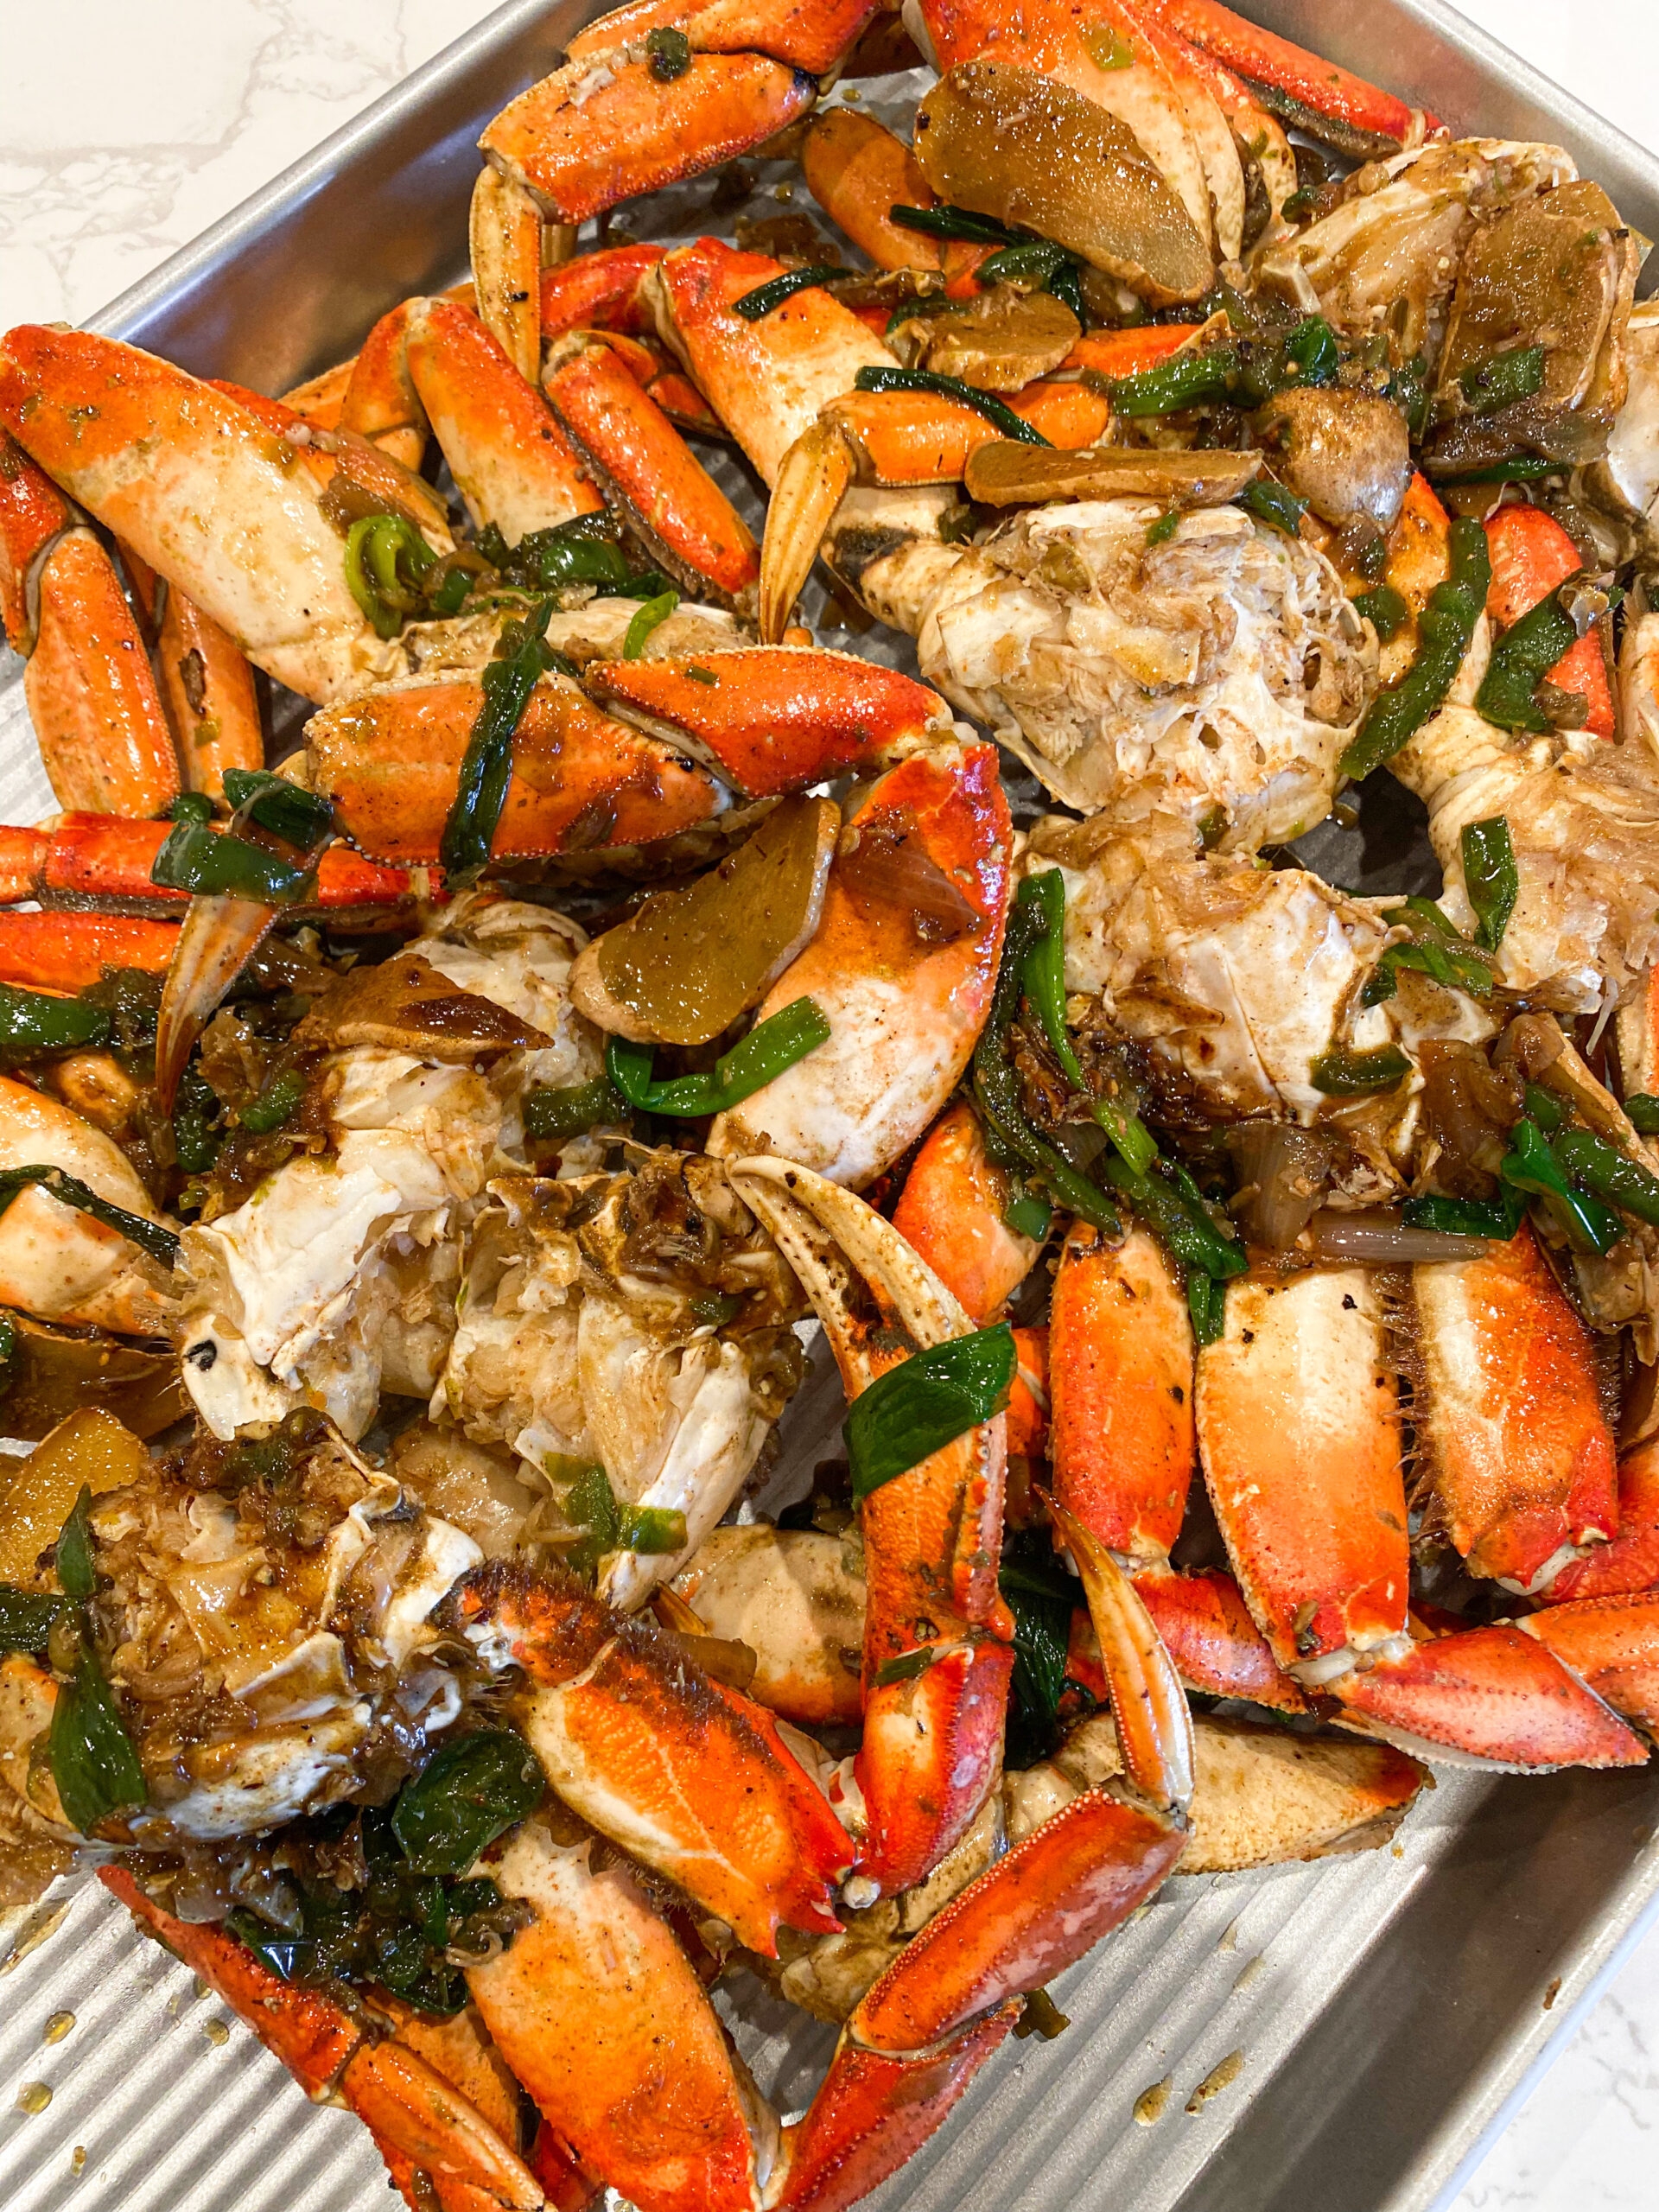 How To Make Cua Bể Ram Mặn (Caramelized Dungeness Crabs) - Ta-Daa!